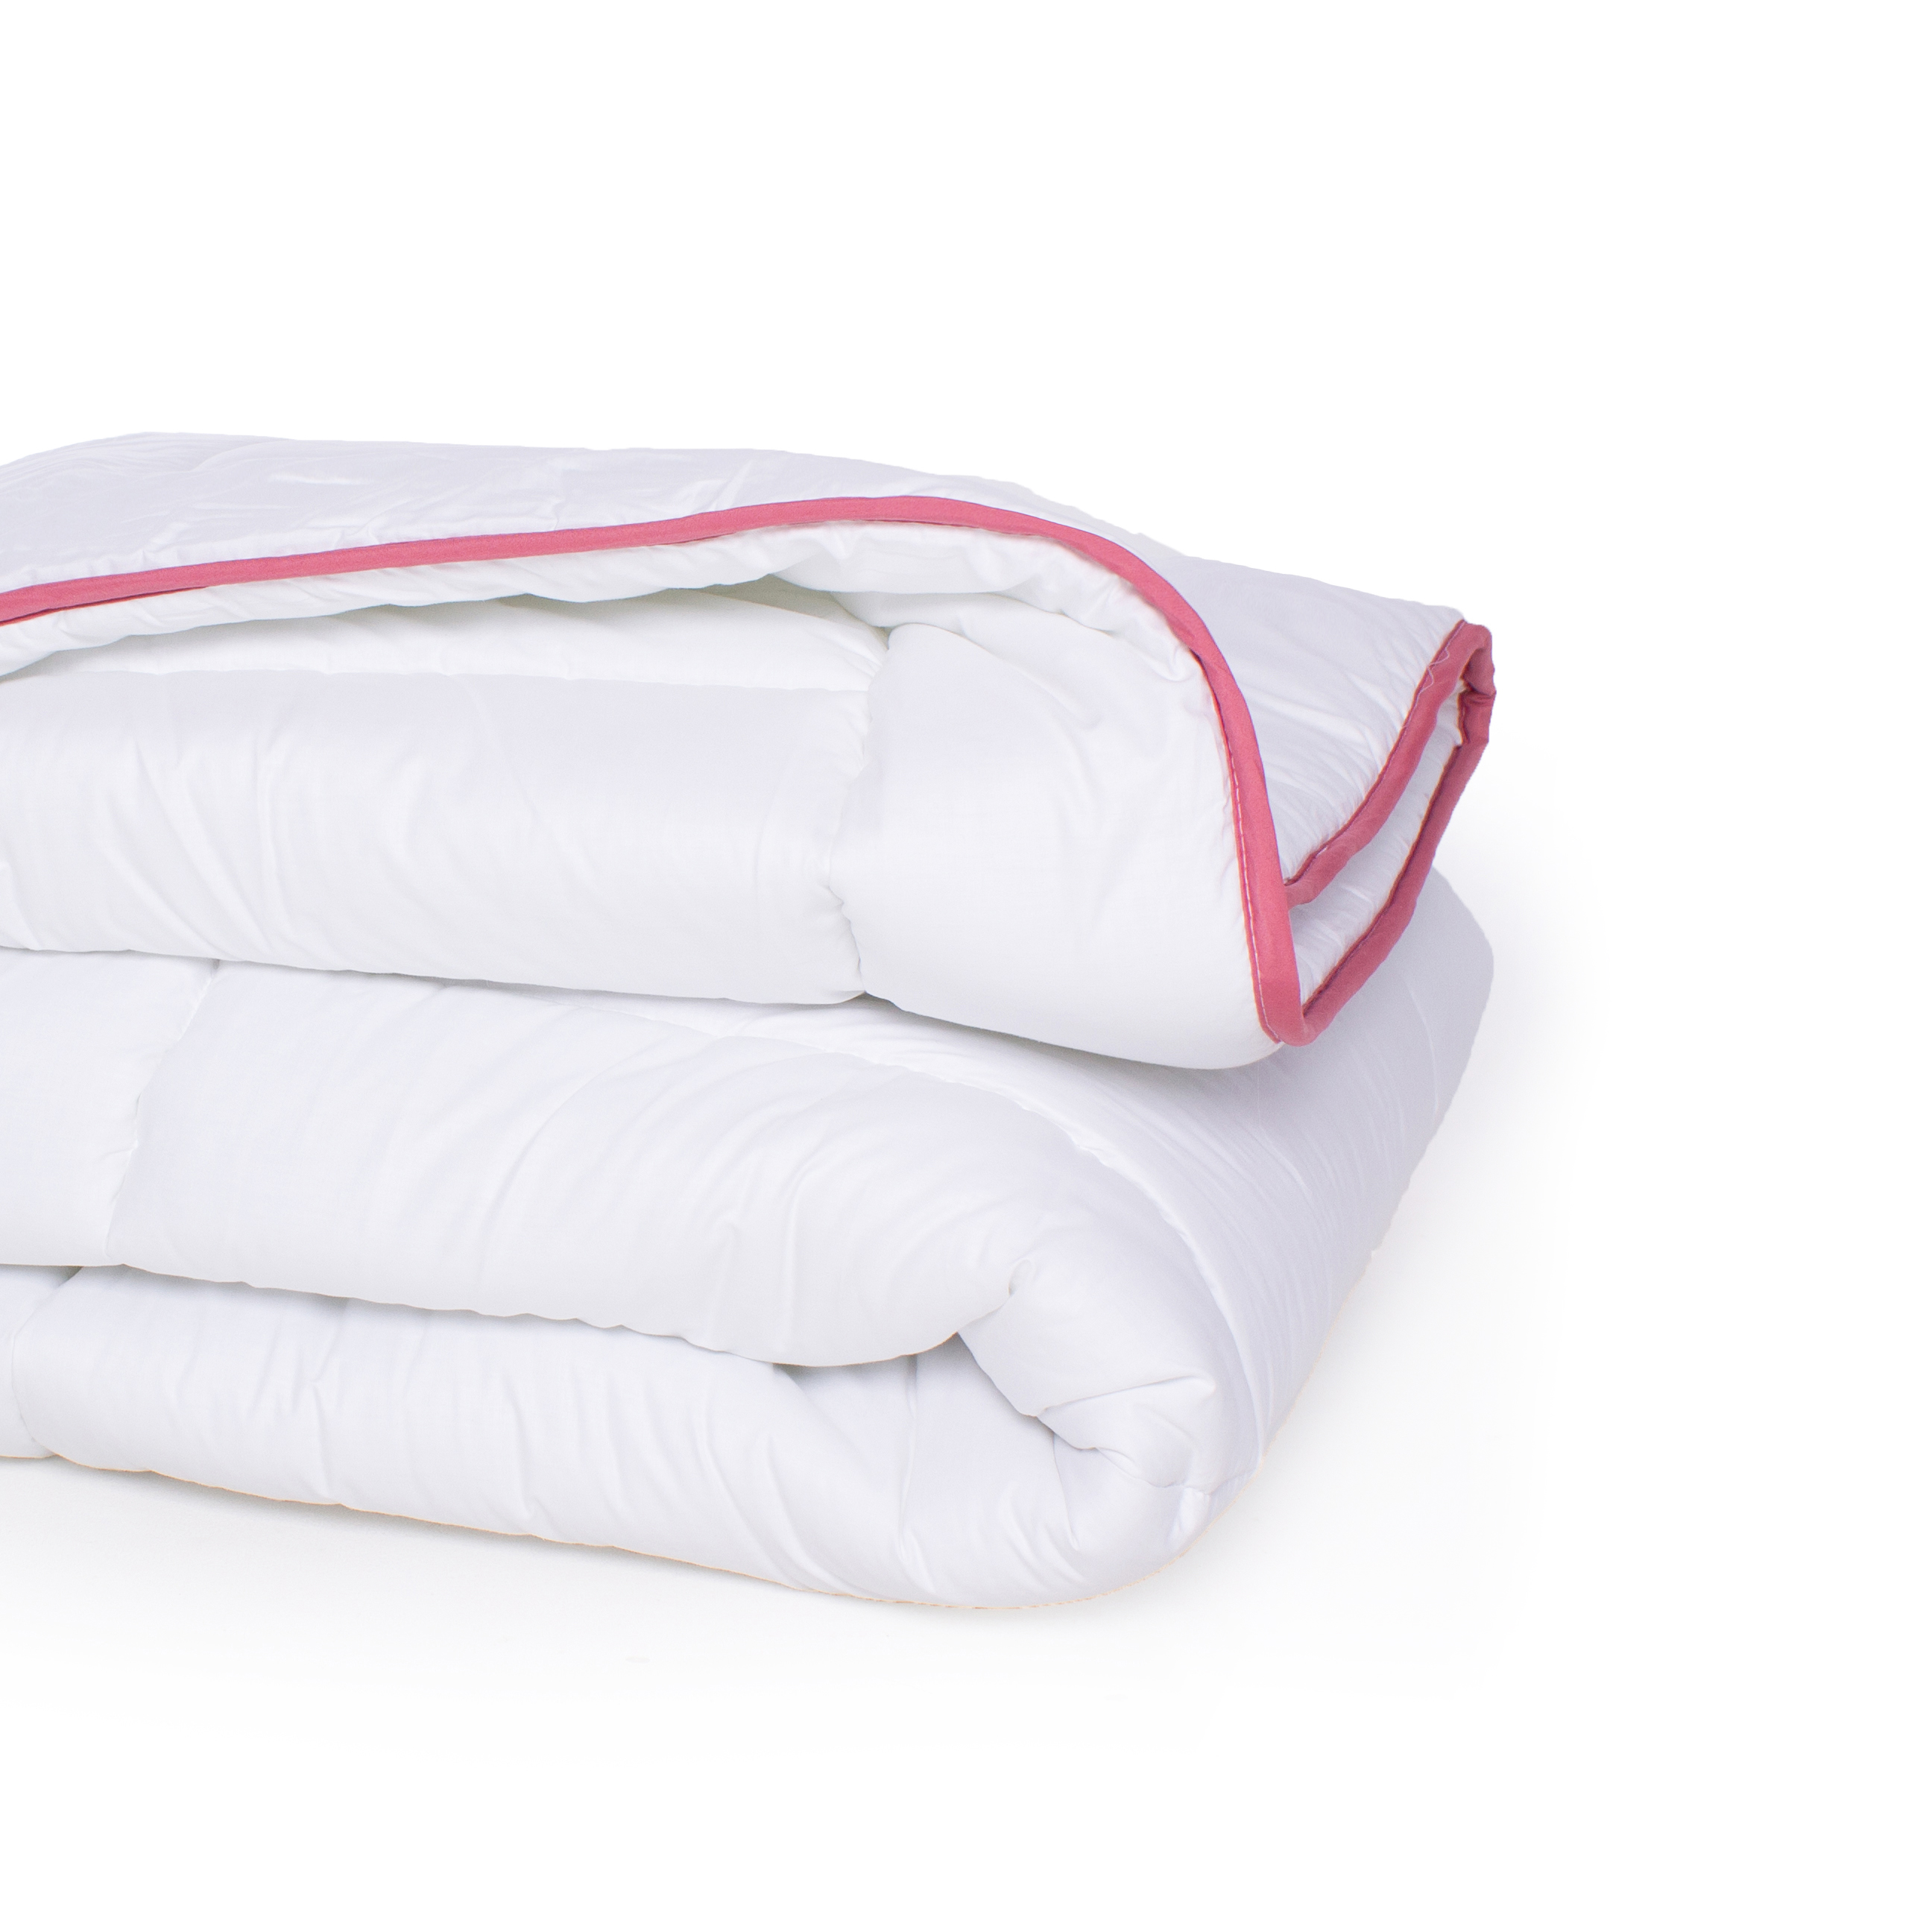 Одеяло антиаллергенное MirSon Deluxe EcoSilk №1307, демисезонное, 140x205 см, белое (237054073) - фото 4